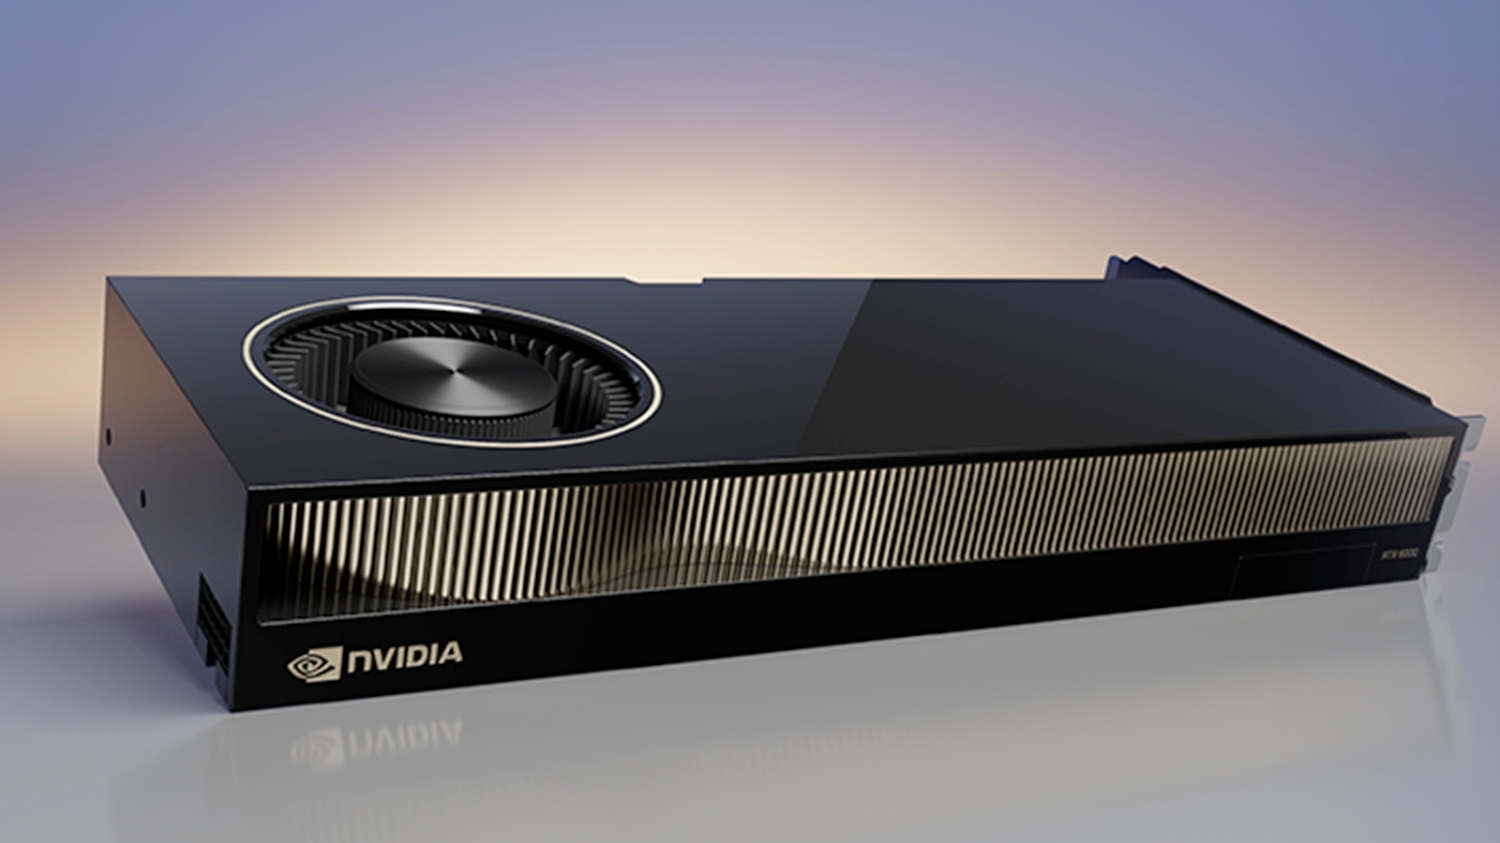 Here's the NVIDIA RTX 6000 workstation GPU